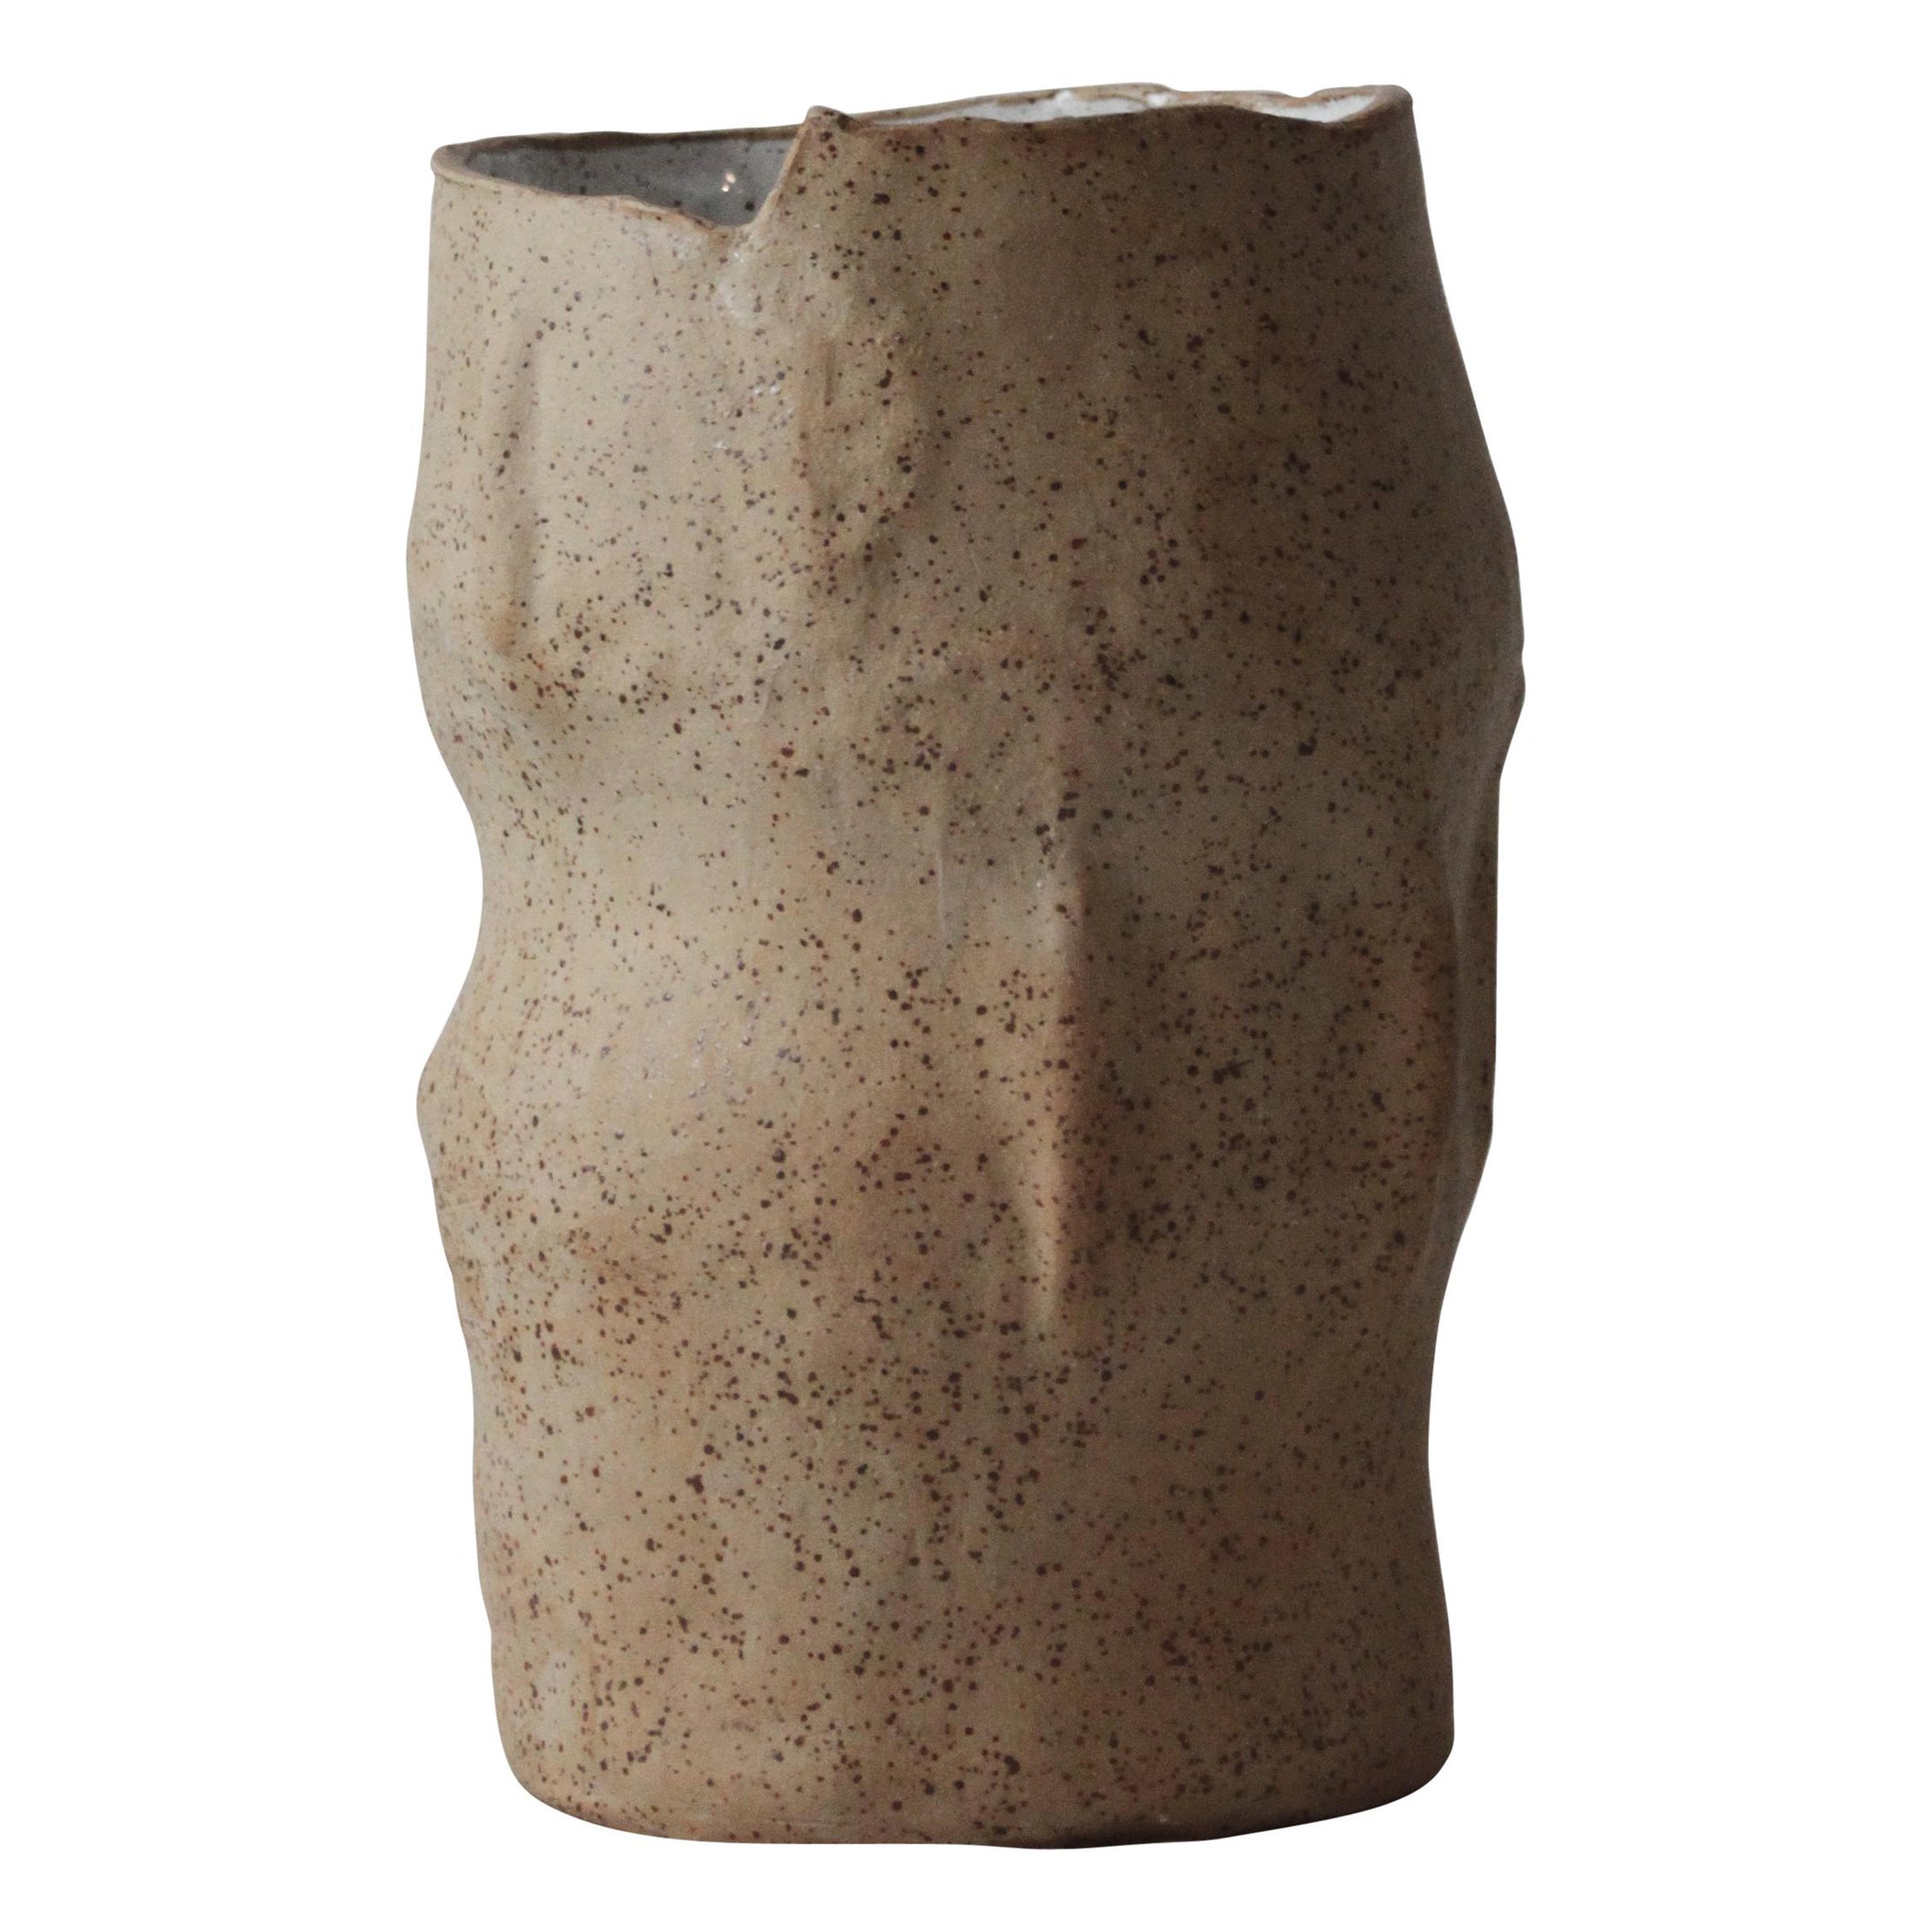 Amorphia Vase by Lava Studio Ceramics